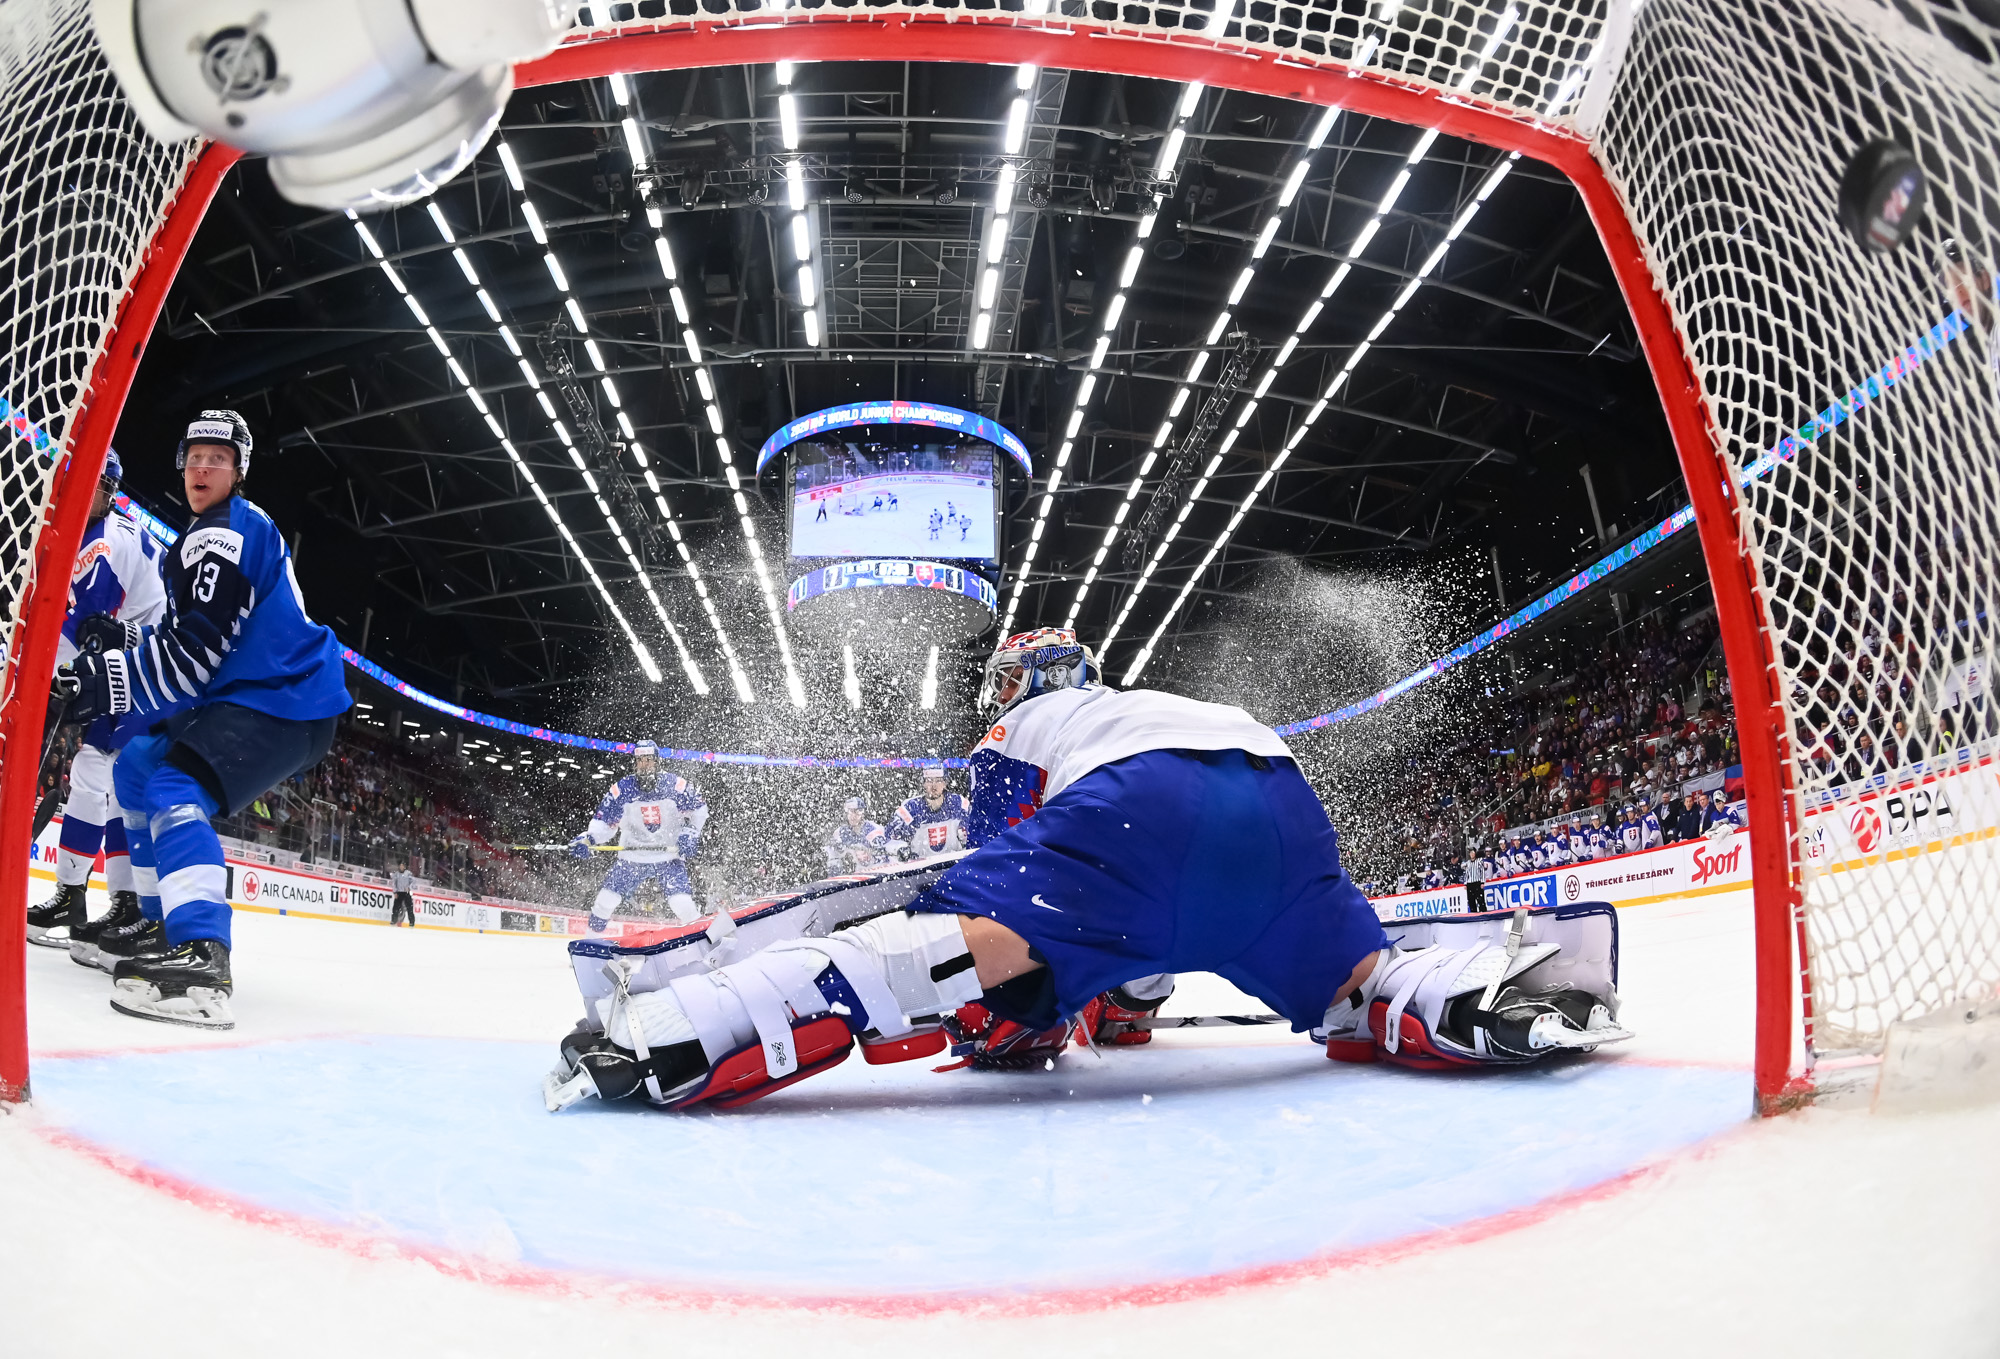 IIHF - Gallery: Finland vs. Slovakia - 2020 IIHF World Junior Championship